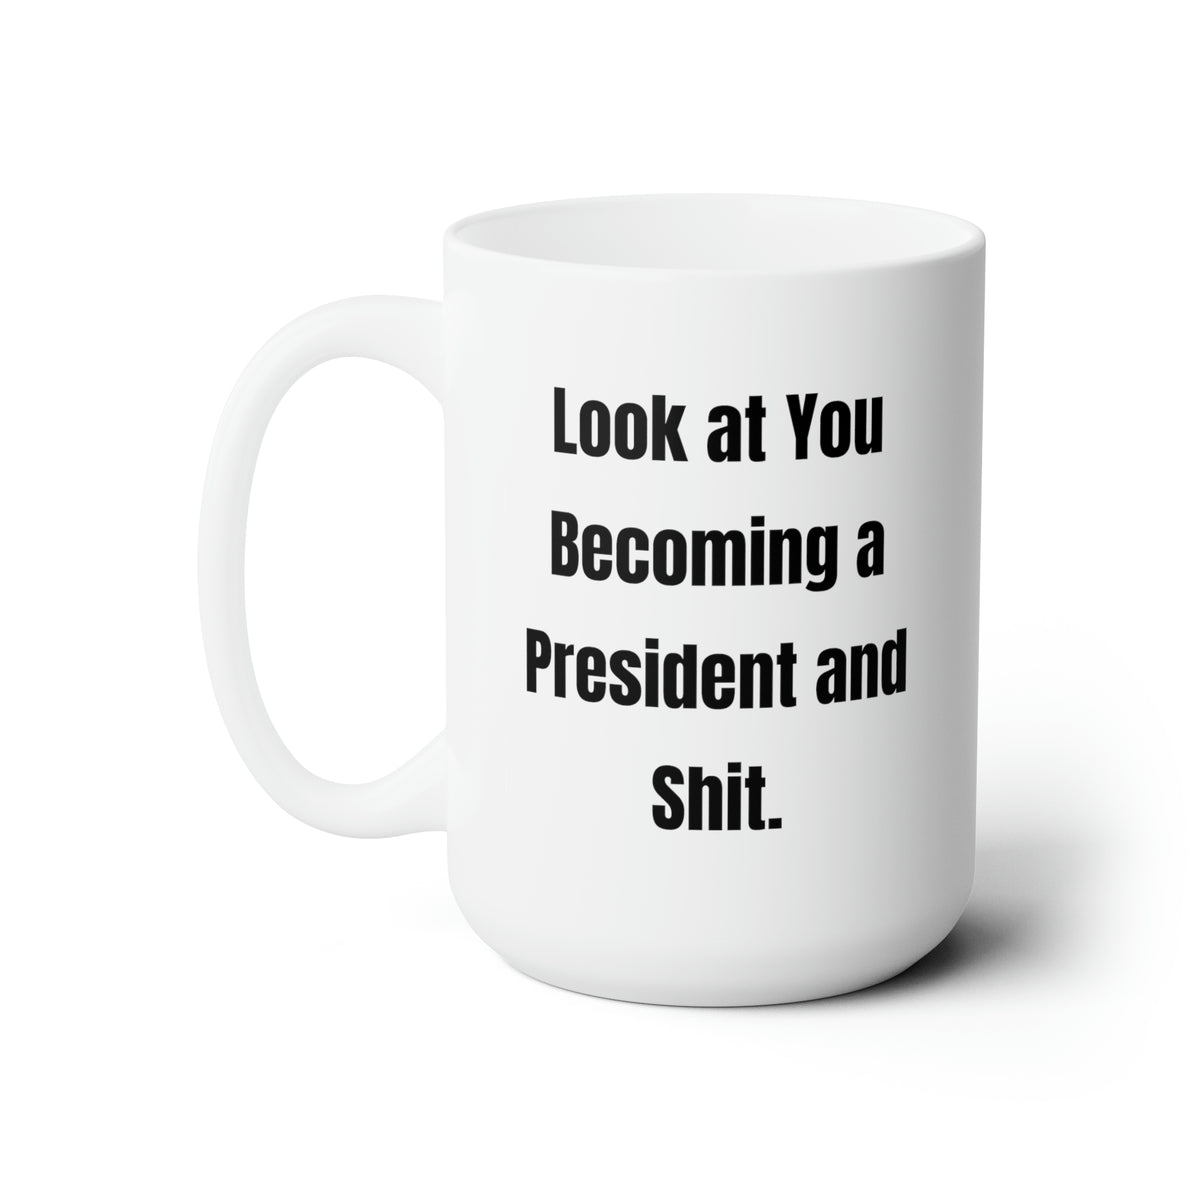 Look at You Becoming a President and Shit. 15oz Mug, President Cup, Unique Gifts For President from Friends, Coffee mug, Tea mug, Travel mug, Ceramic mug, Porcelain mug, Coffee cup, Tea cup